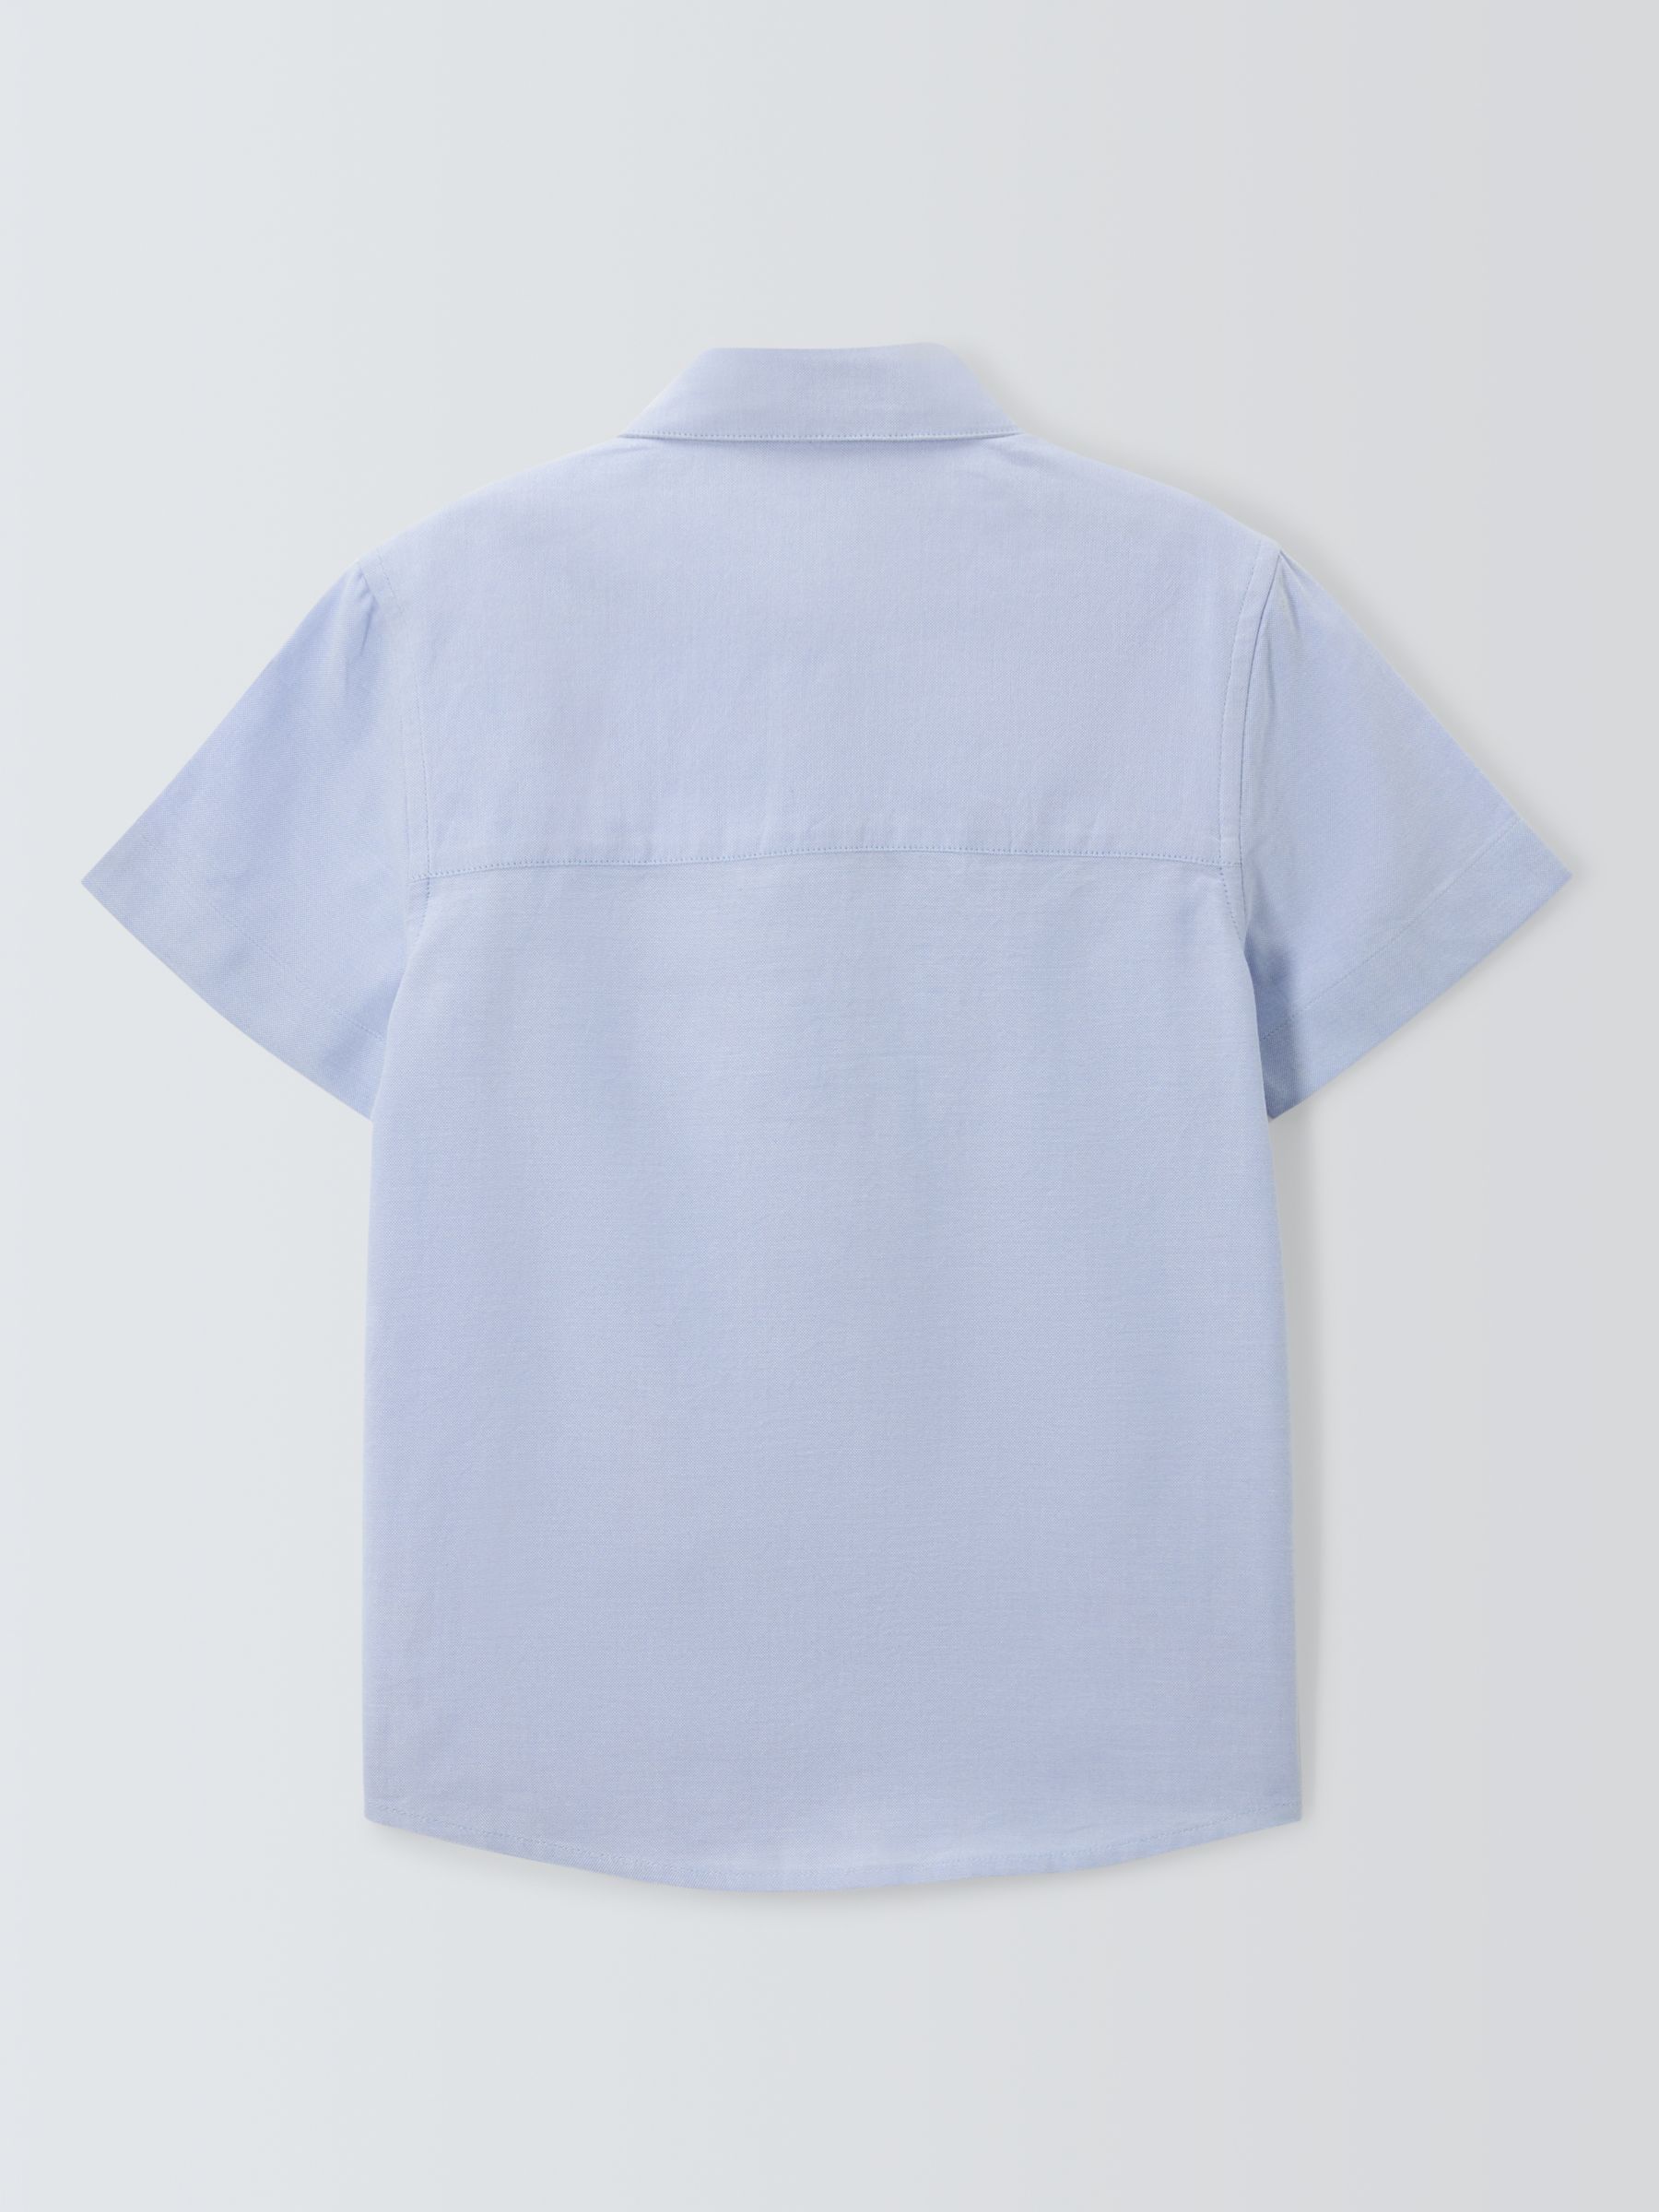 John Lewis Heirloom Collection Kids' Oxford Short Sleeve Shirt, Blue, 11 years